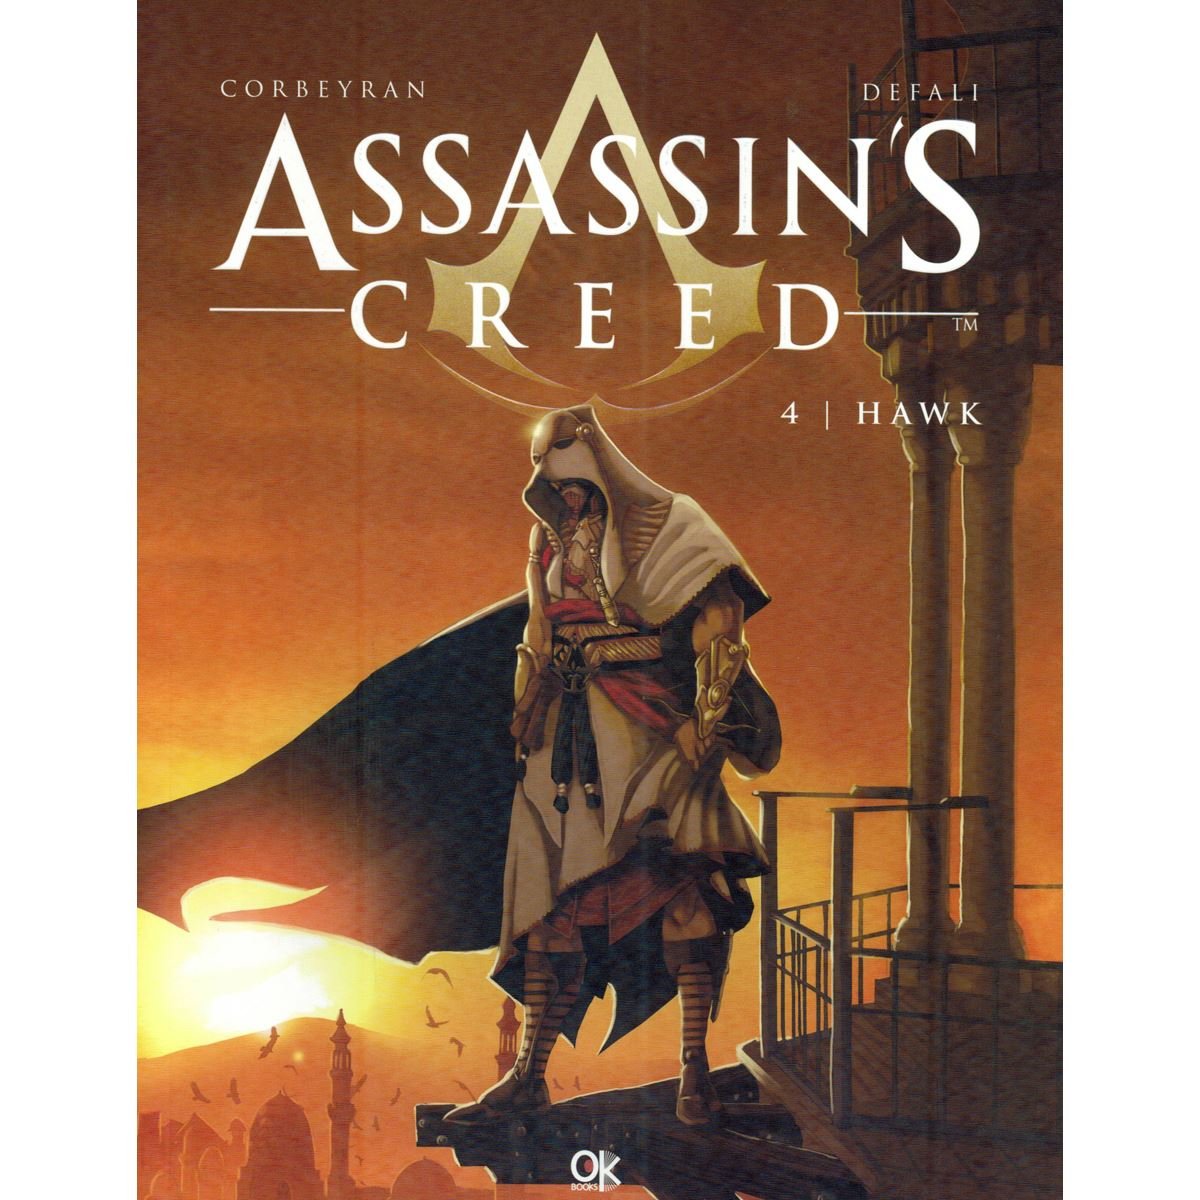 Assassins Creed. 4 Hawk